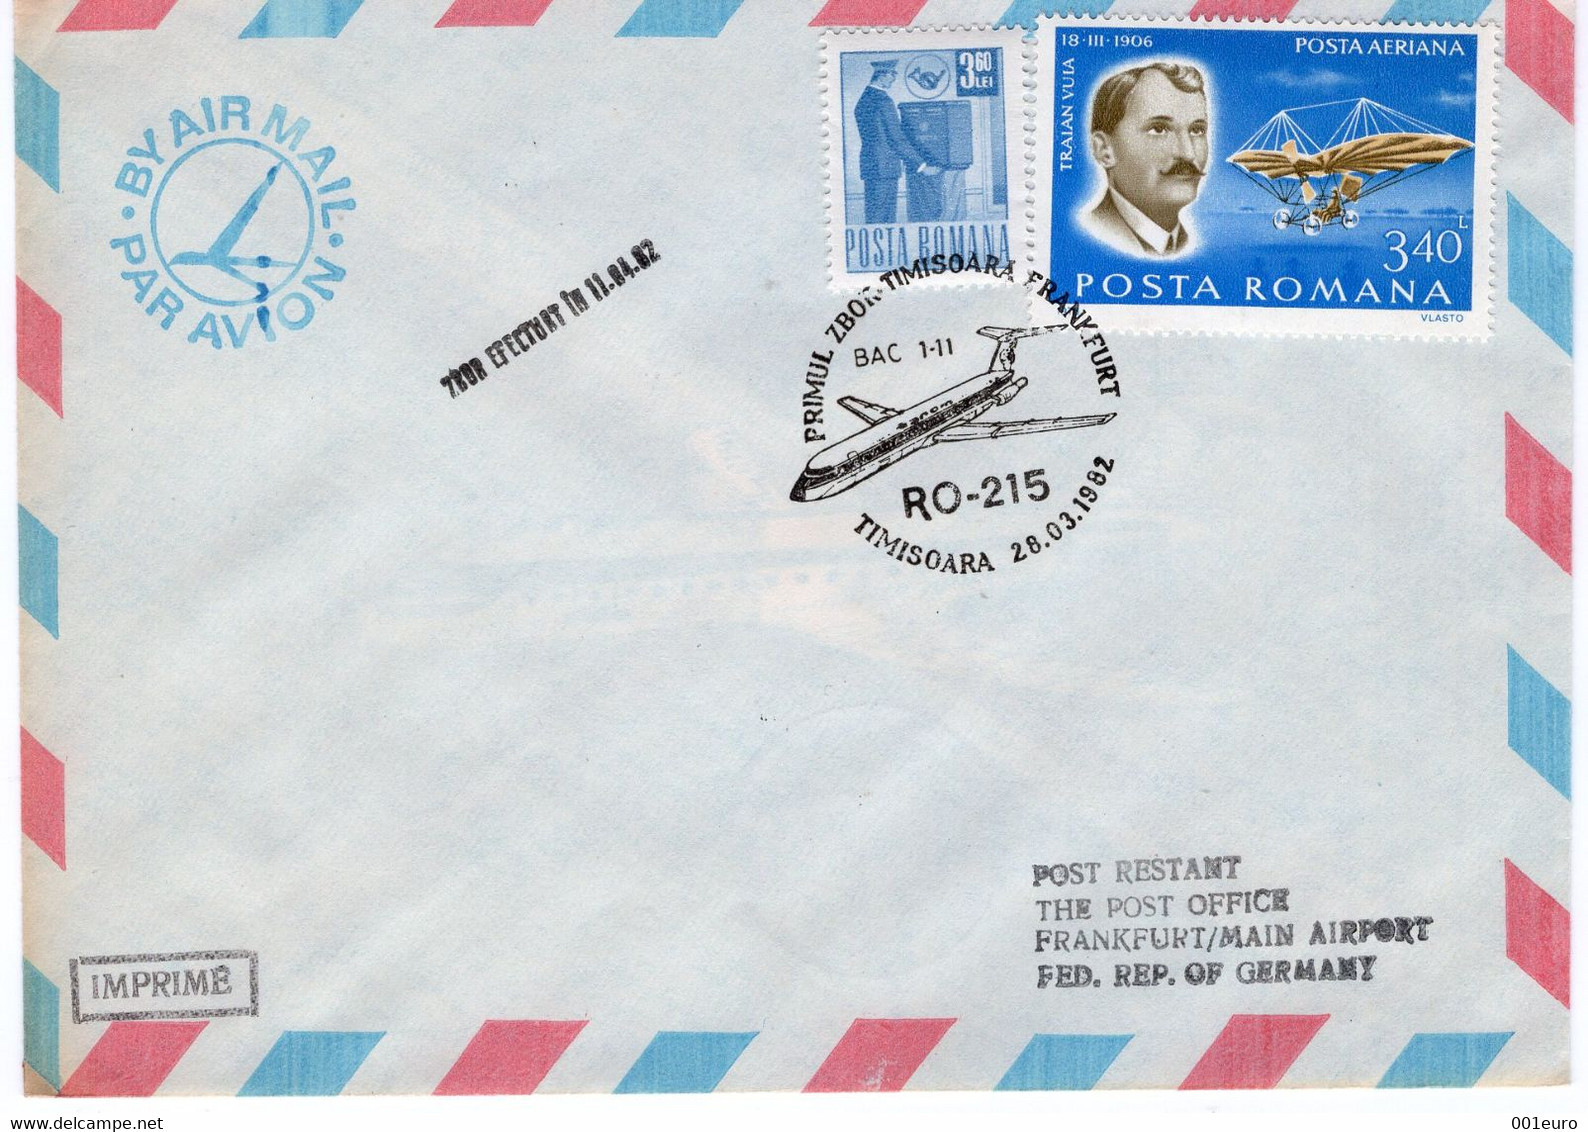 ROMANIA 1982: AEROPHILATELY - FLIGHT TIMISOARA - FRANKFURT, Illustrated Postmark On Cover  - Registered Shipping! - Poststempel (Marcophilie)